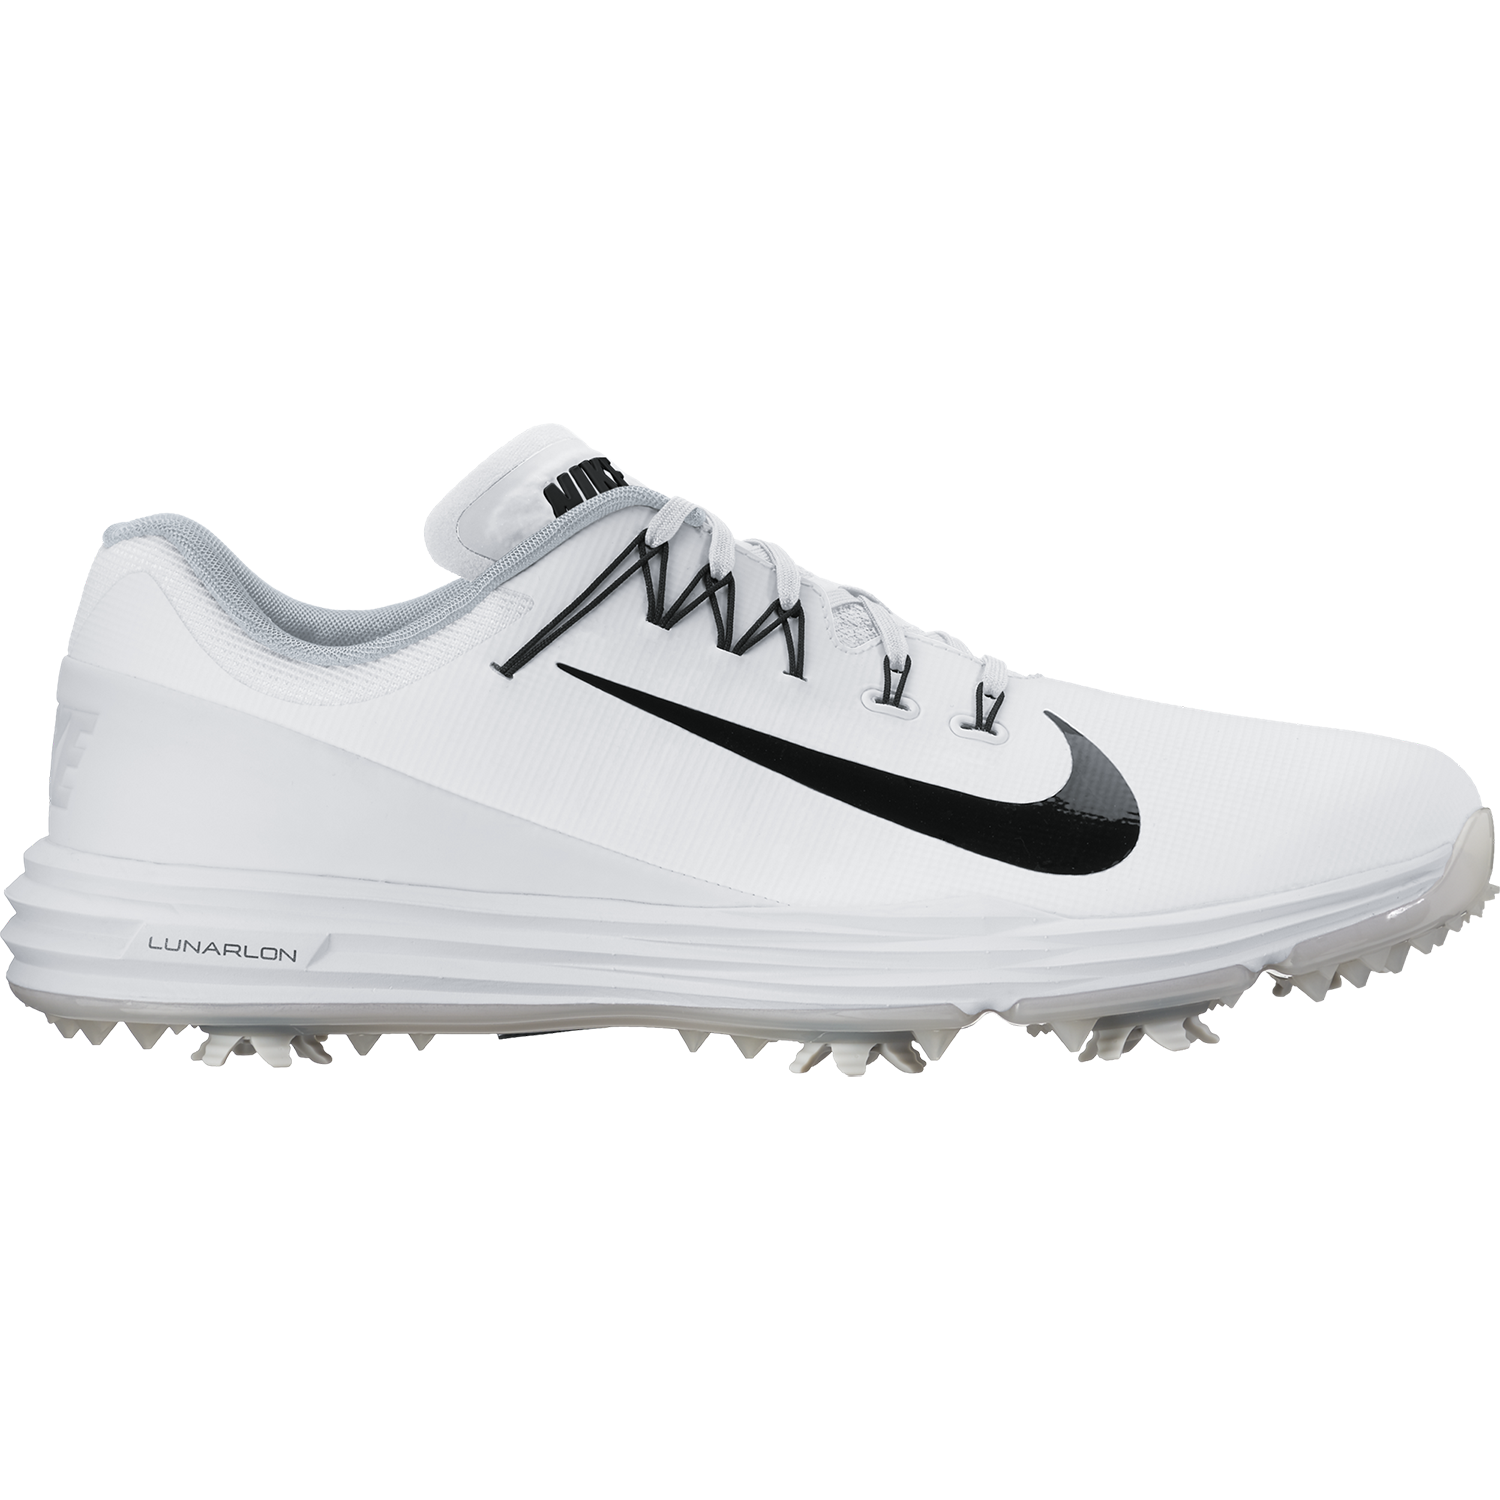 Nike Lunar Command 2 Men's Golf Shoe 